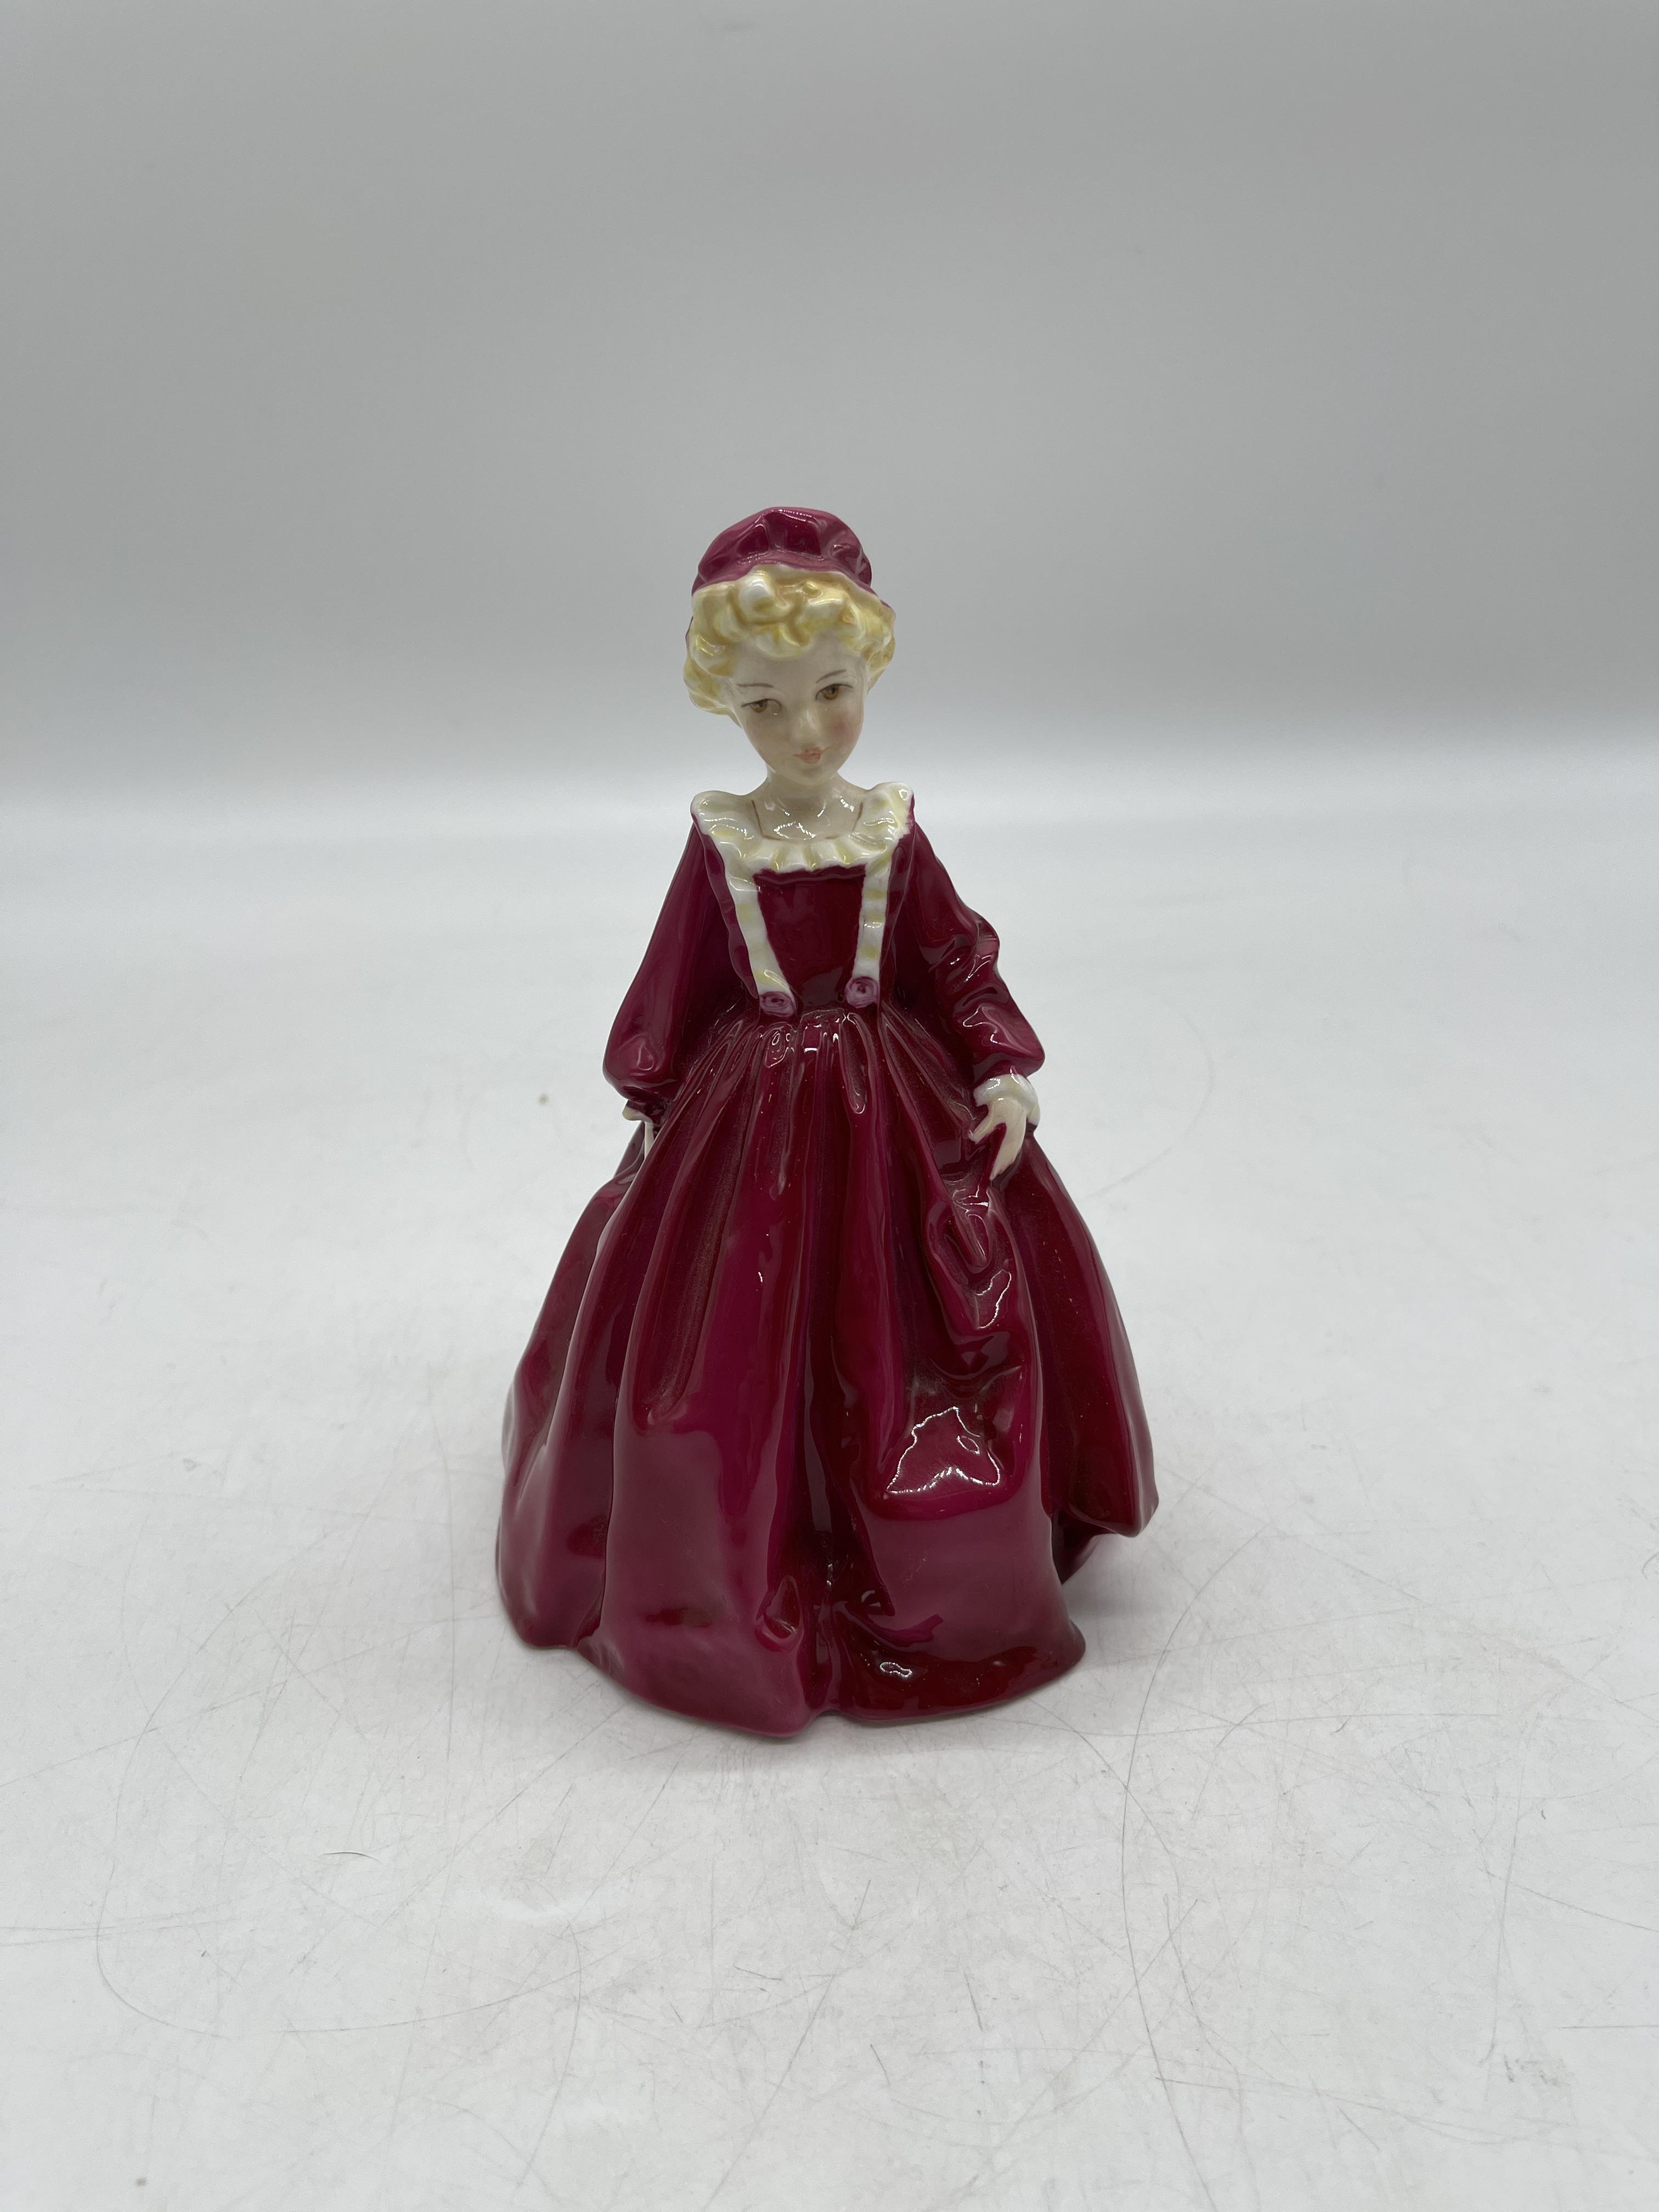 Pink Royal Doulton ceramic figurines - Image 27 of 41